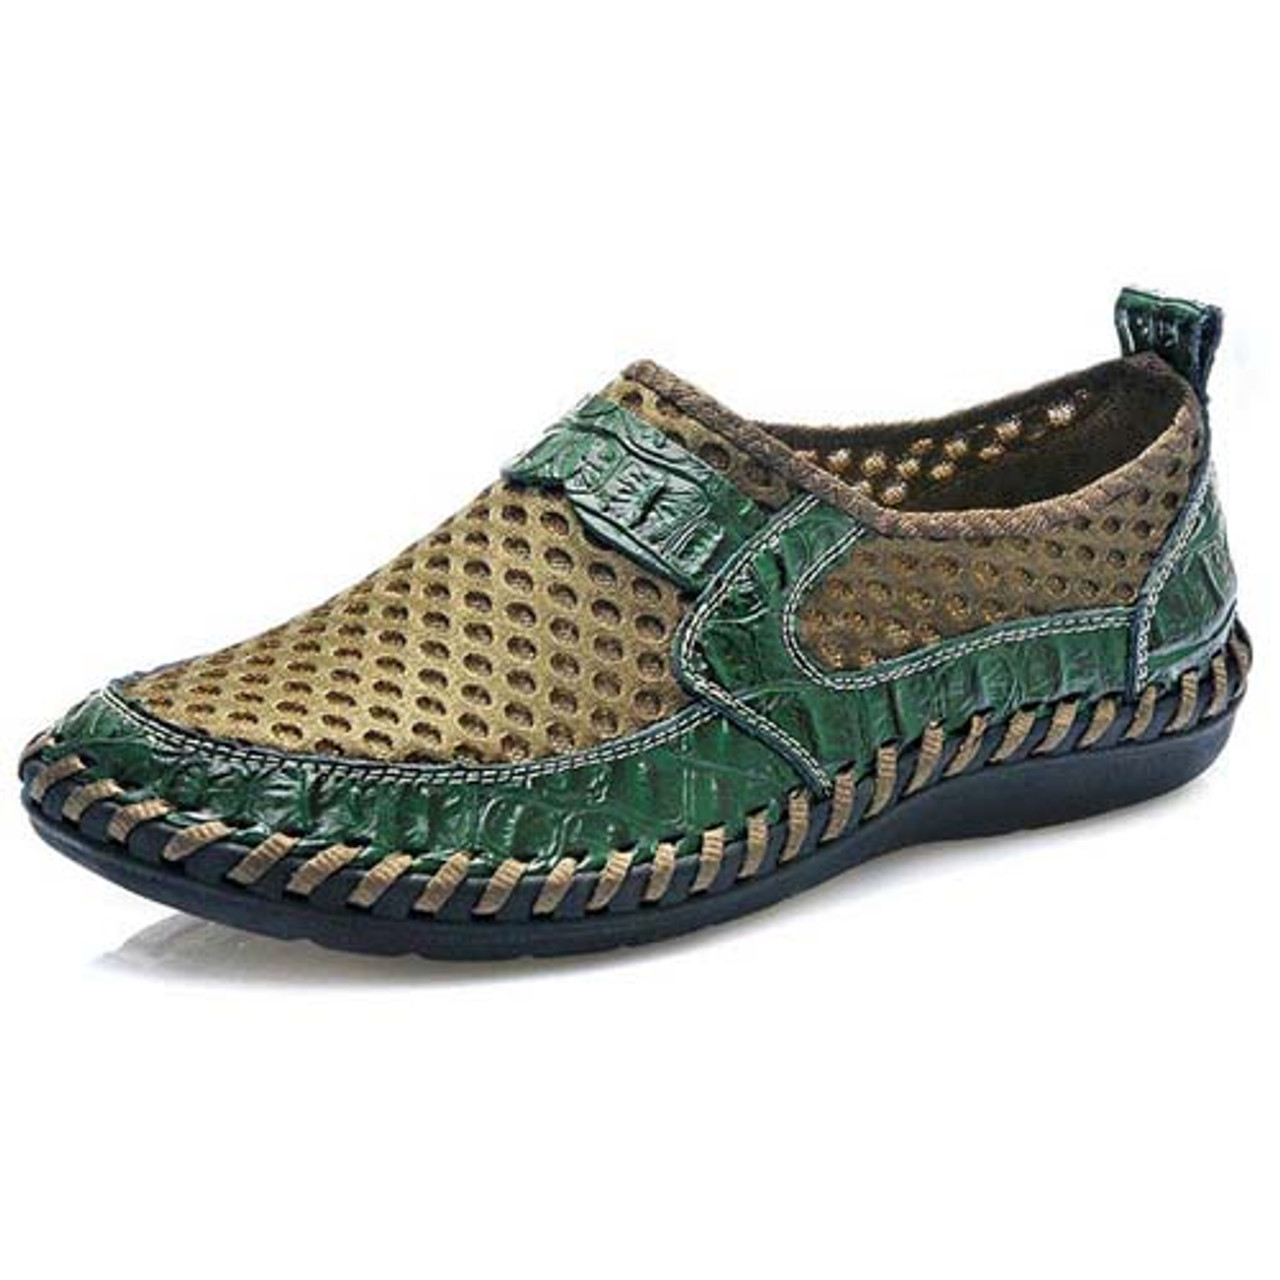 men's green casual shoes